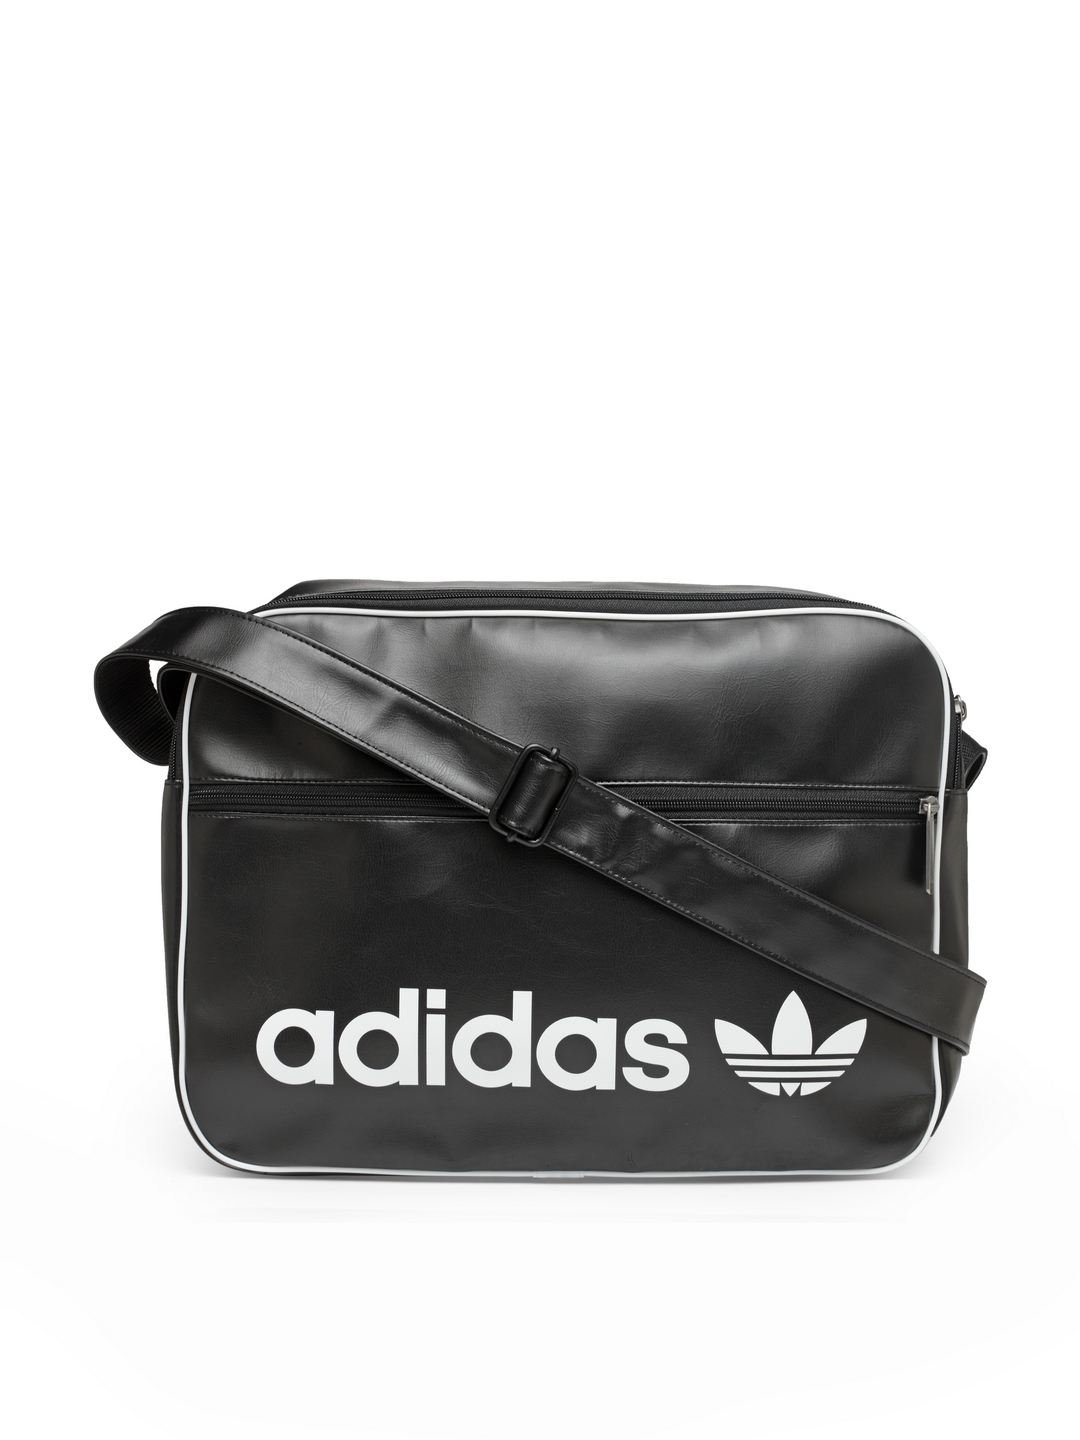 Adidas Messenger Bag Black Cheap Sale SAVE 38  pivphuketcom